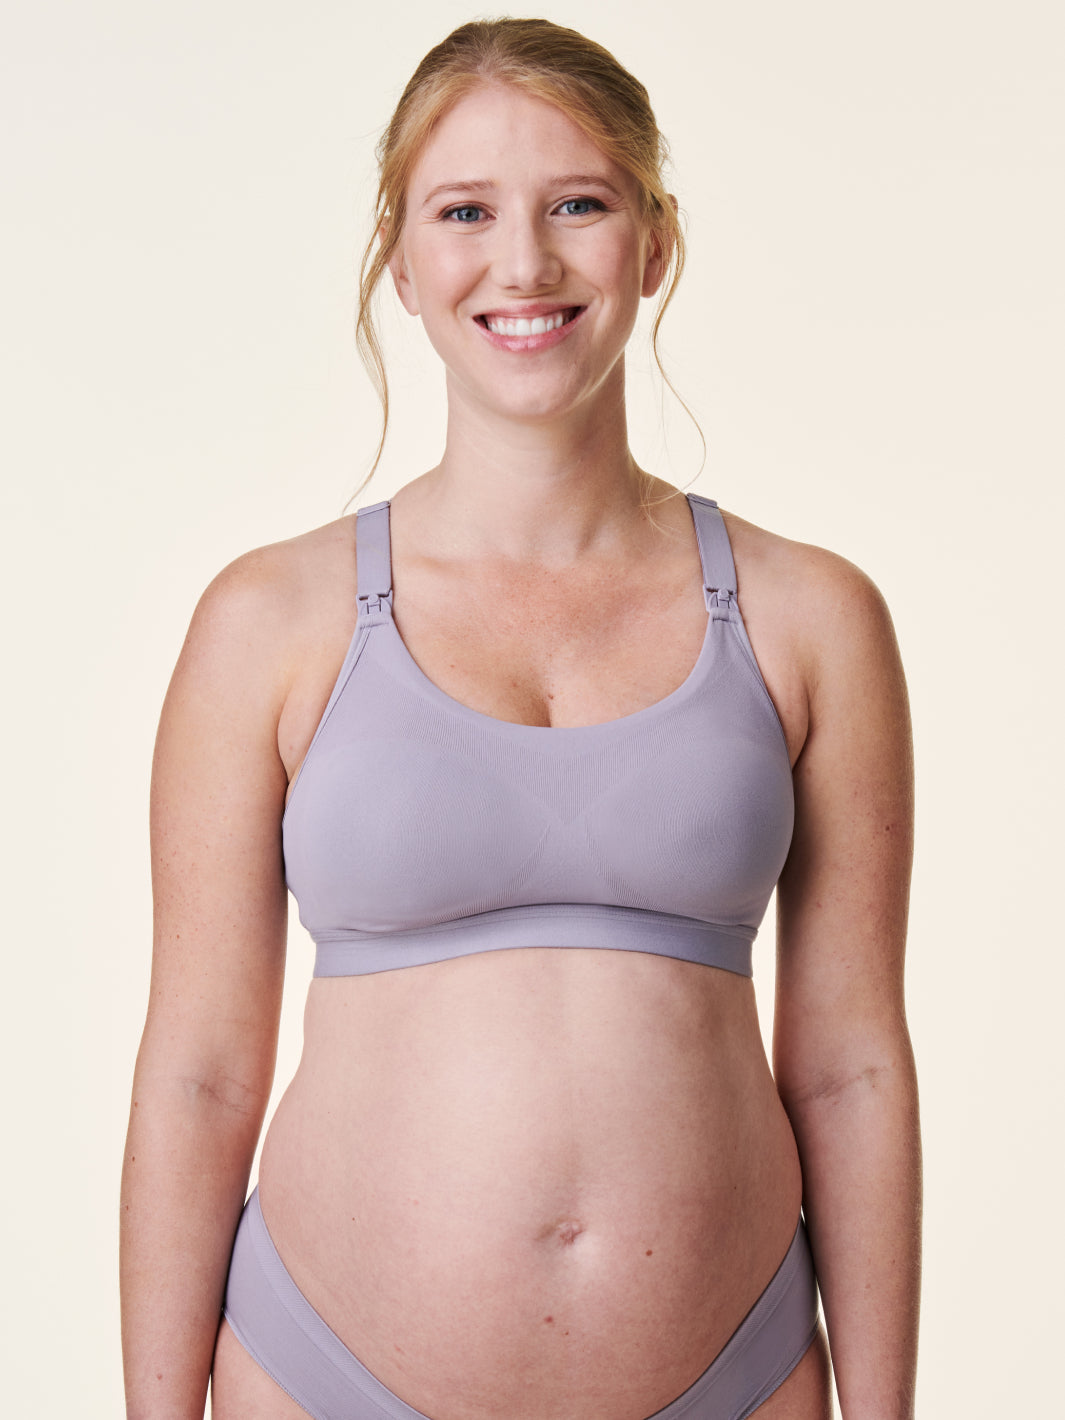 Flexible maternity / nursing sports bra, Eco-friendly